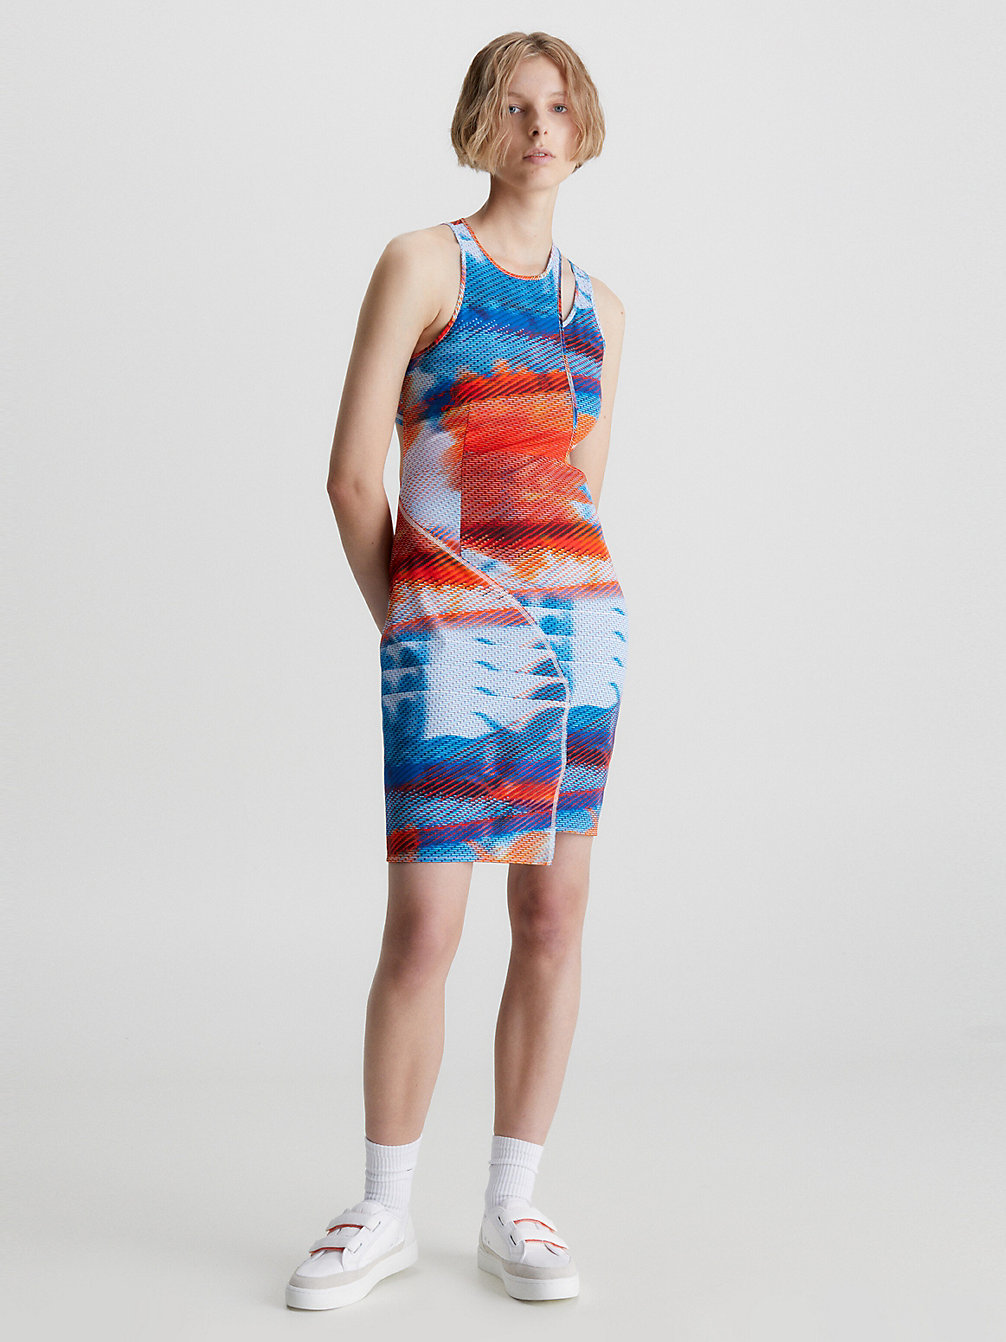 MOTION FLOWER AOP Asymmetric Cut Out Bodycon Dress undefined women Calvin Klein